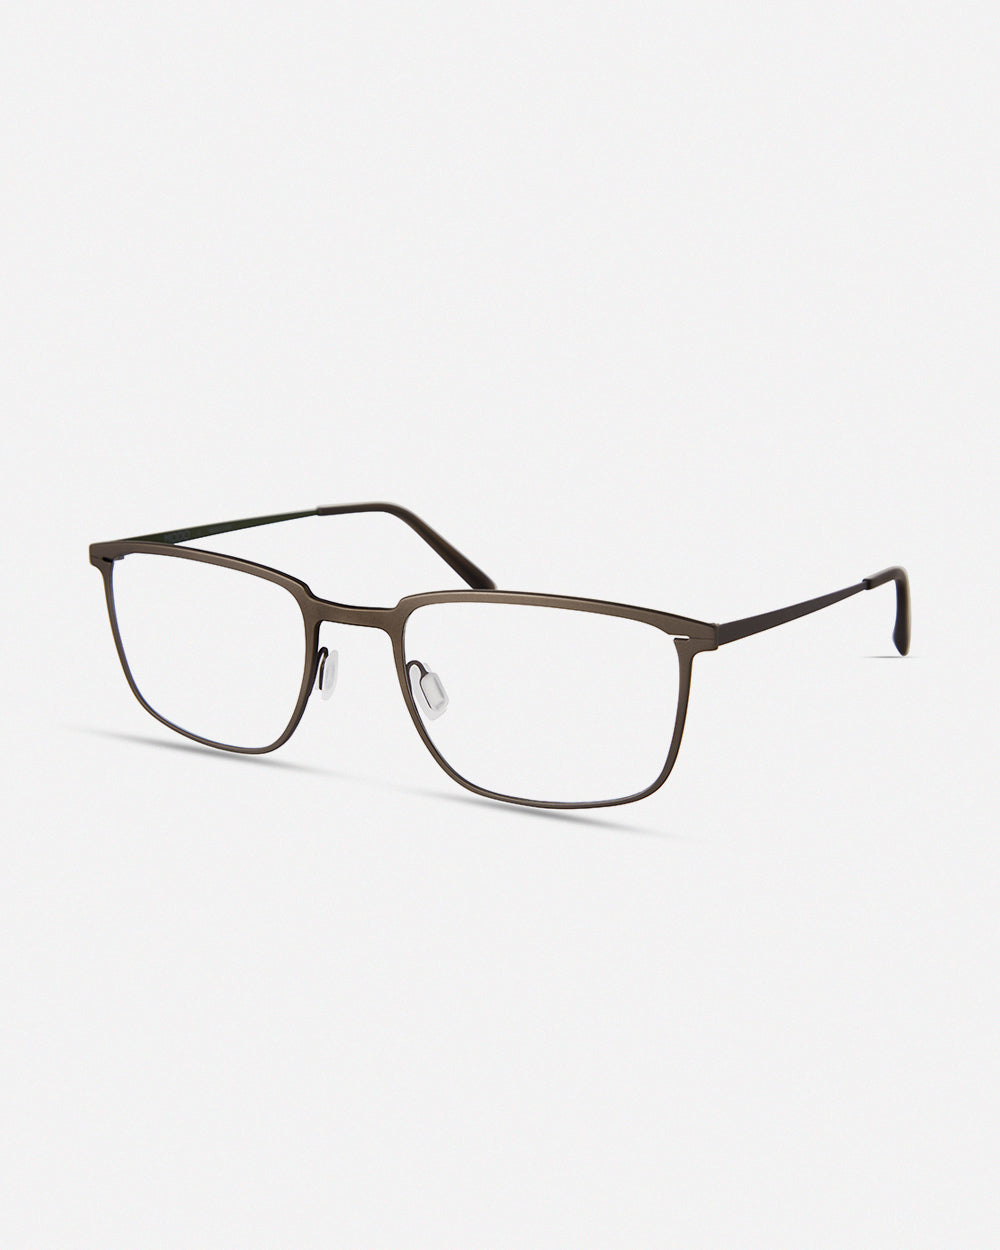 All glasses – MODO Eyewear